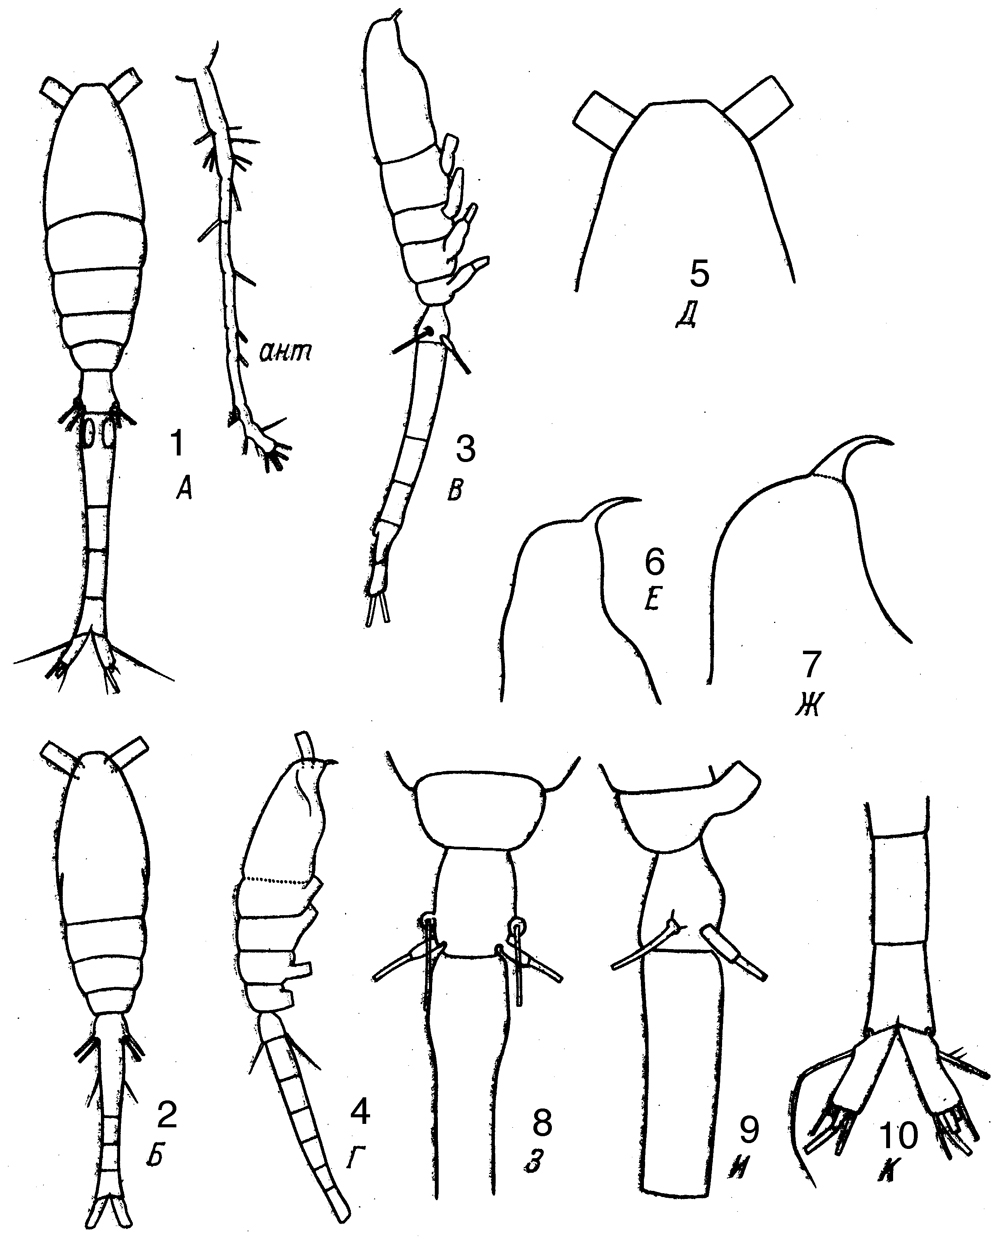 Species Oithona hamata - Plate 5 of morphological figures